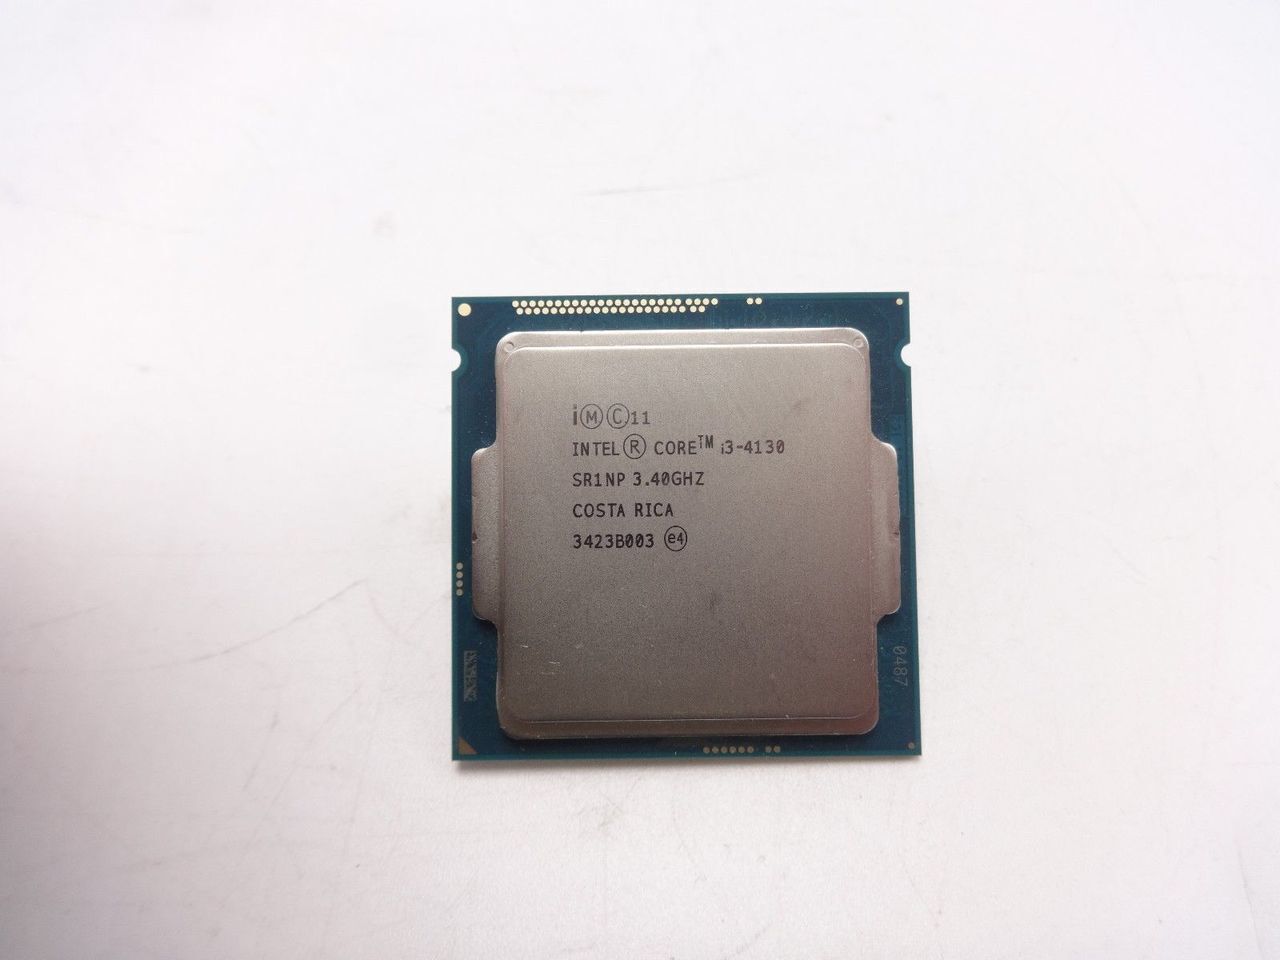 Intel SR1NP CORE i3-4130 Dual-CORE 3.40GHZ 3M/5GT/s LGA1150 HASWELL CPU